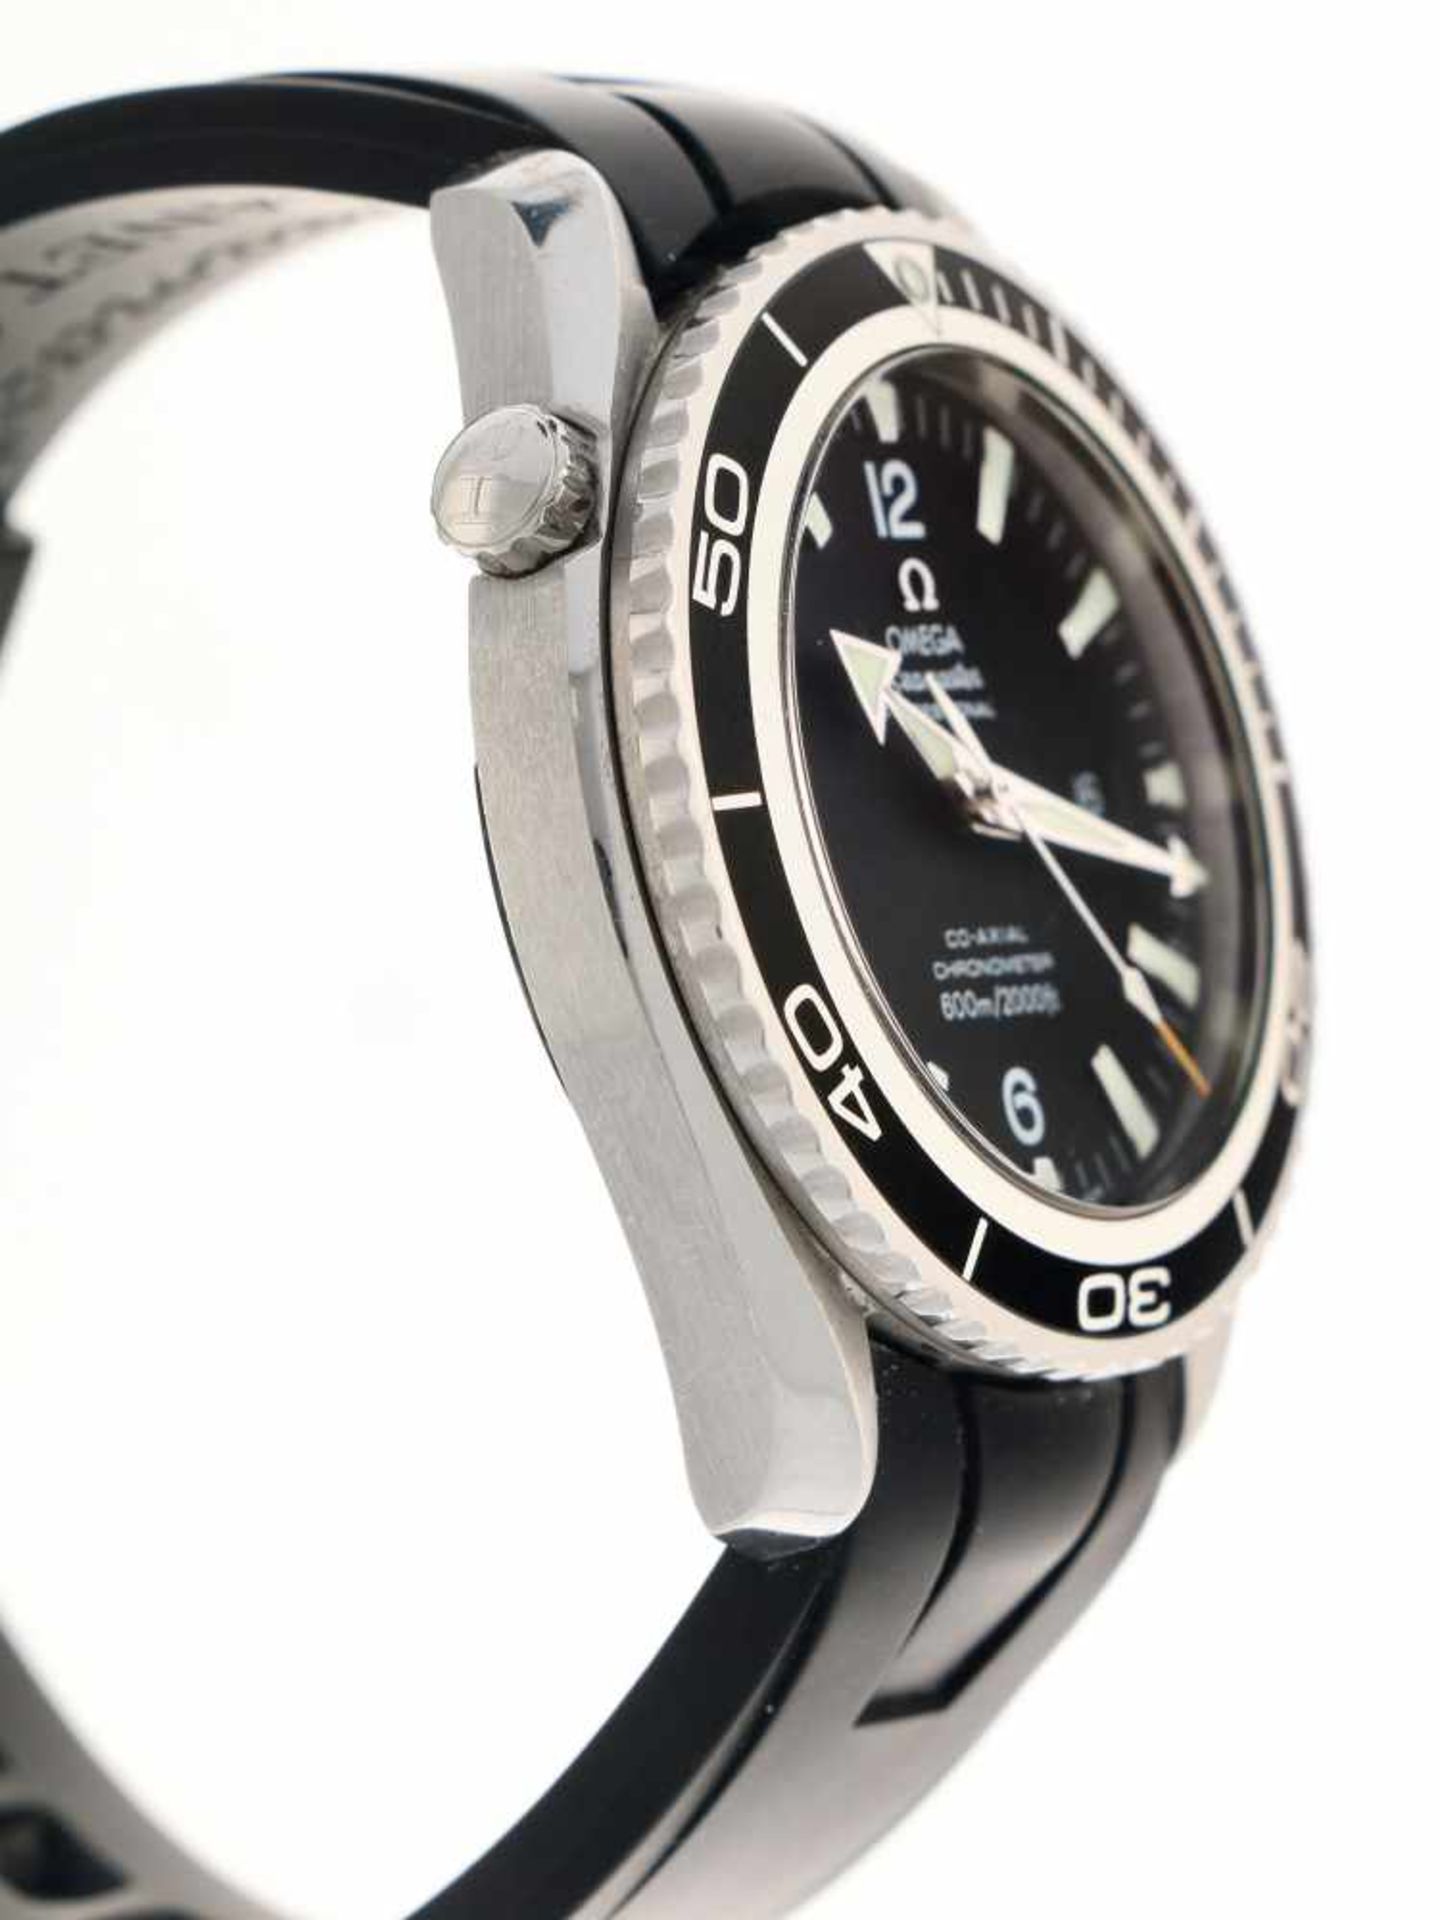 Omega Seamaster Planet Ocean 29005091 - Men's watch - Automatic - Ca. 2008. - Bild 4 aus 6